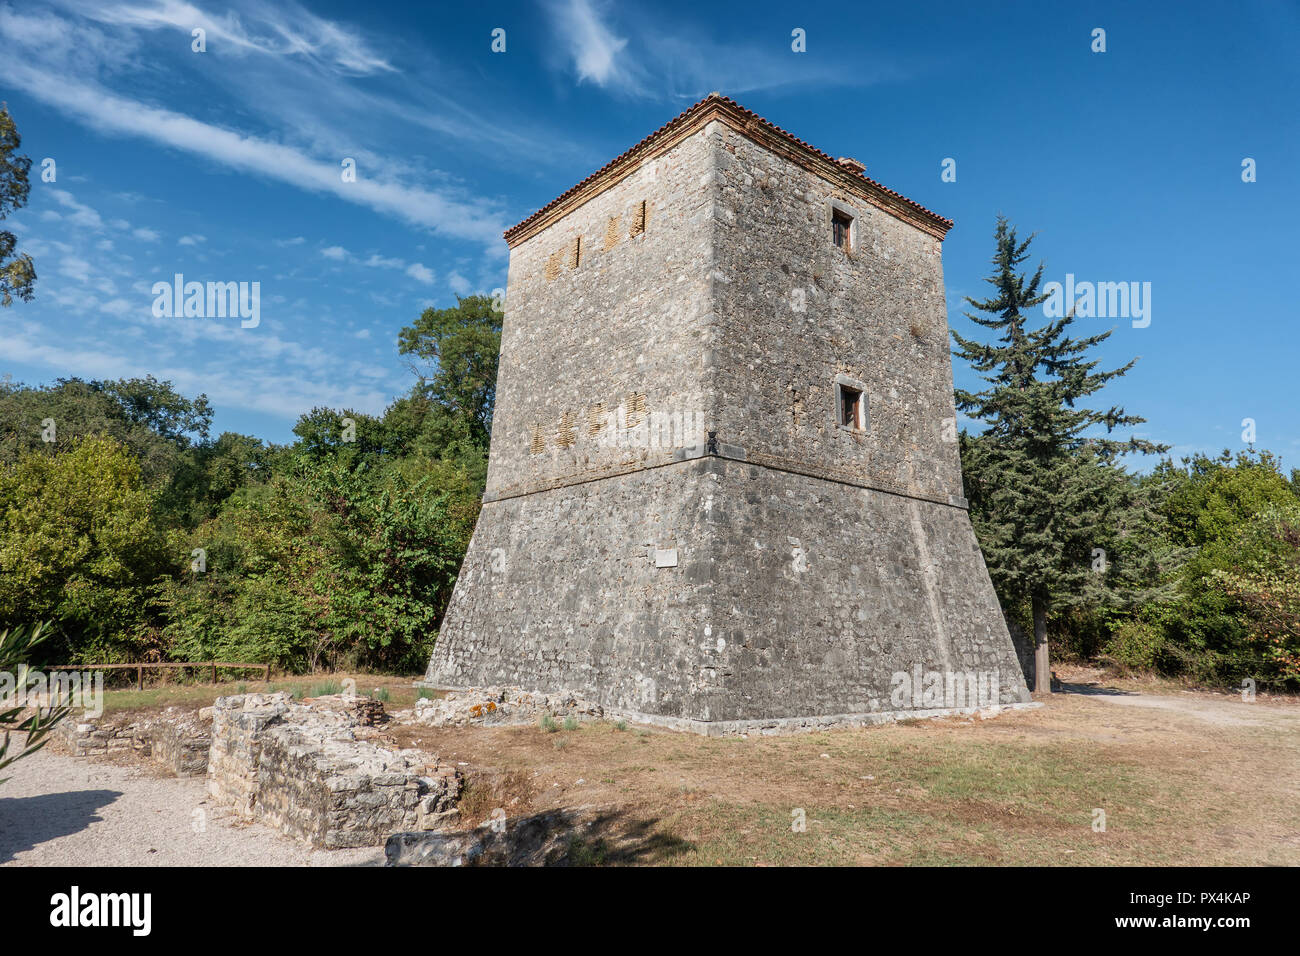 Venetian tower of Butrint ancient city, Albania Stock Photo